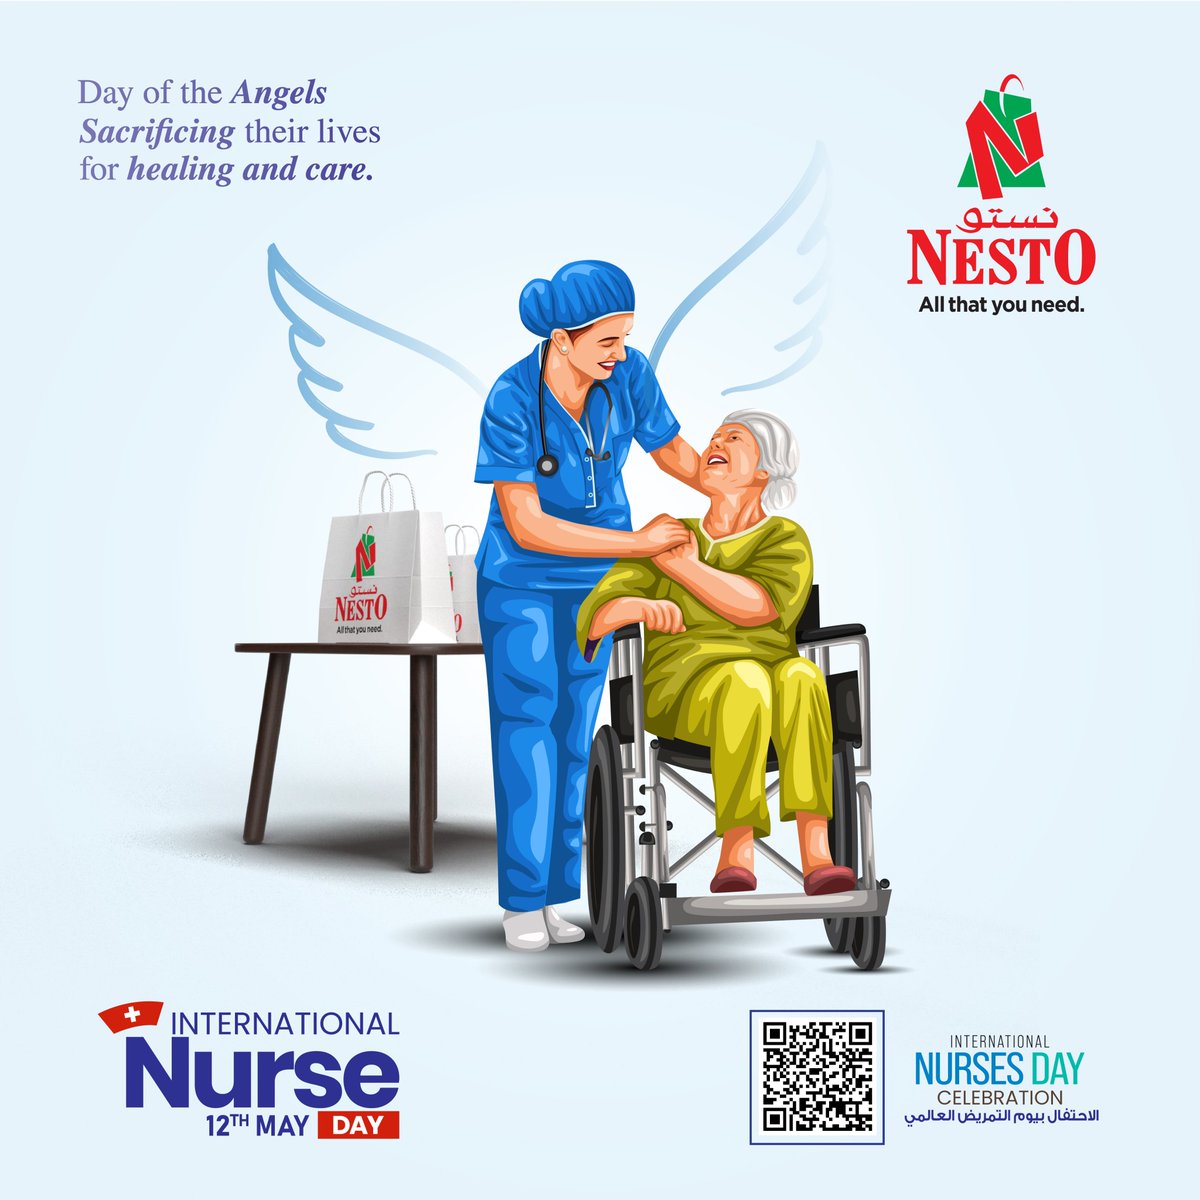 👩🏻‍⚕️Happy International Nurses Day from Nesto👨🏻‍⚕️👩🏻‍⚕️🎉 #InternationalNursesDay 
.
#Nursesday #Nurse #Nursesdaycelebration #Saudinurse #Indiannurse #Nesto #Nestohypermarket #Hypernesto #SaveatNestO #Saudiarabia #Riyadh #Riyadhnurses #nursejobs